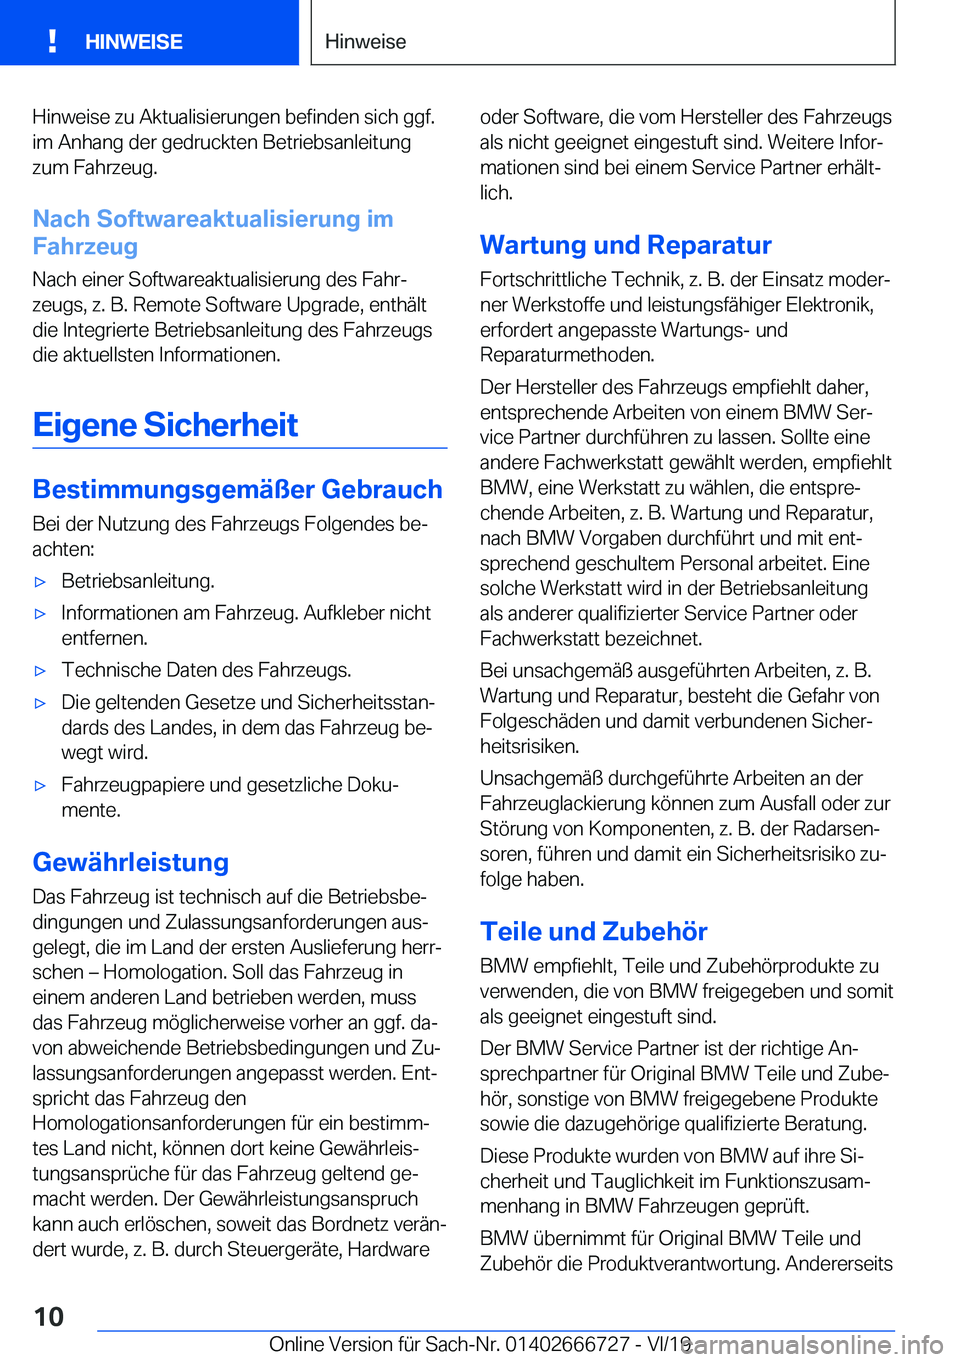 BMW M5 2020  Betriebsanleitungen (in German) �H�i�n�w�e�i�s�e��z�u��A�k�t�u�a�l�i�s�i�e�r�u�n�g�e�n��b�e�f�i�n�d�e�n��s�i�c�h��g�g�f�.�i�m��A�n�h�a�n�g��d�e�r��g�e�d�r�u�c�k�t�e�n��B�e�t�r�i�e�b�s�a�n�l�e�i�t�u�n�g�z�u�m��F�a�h�r�z�e�u